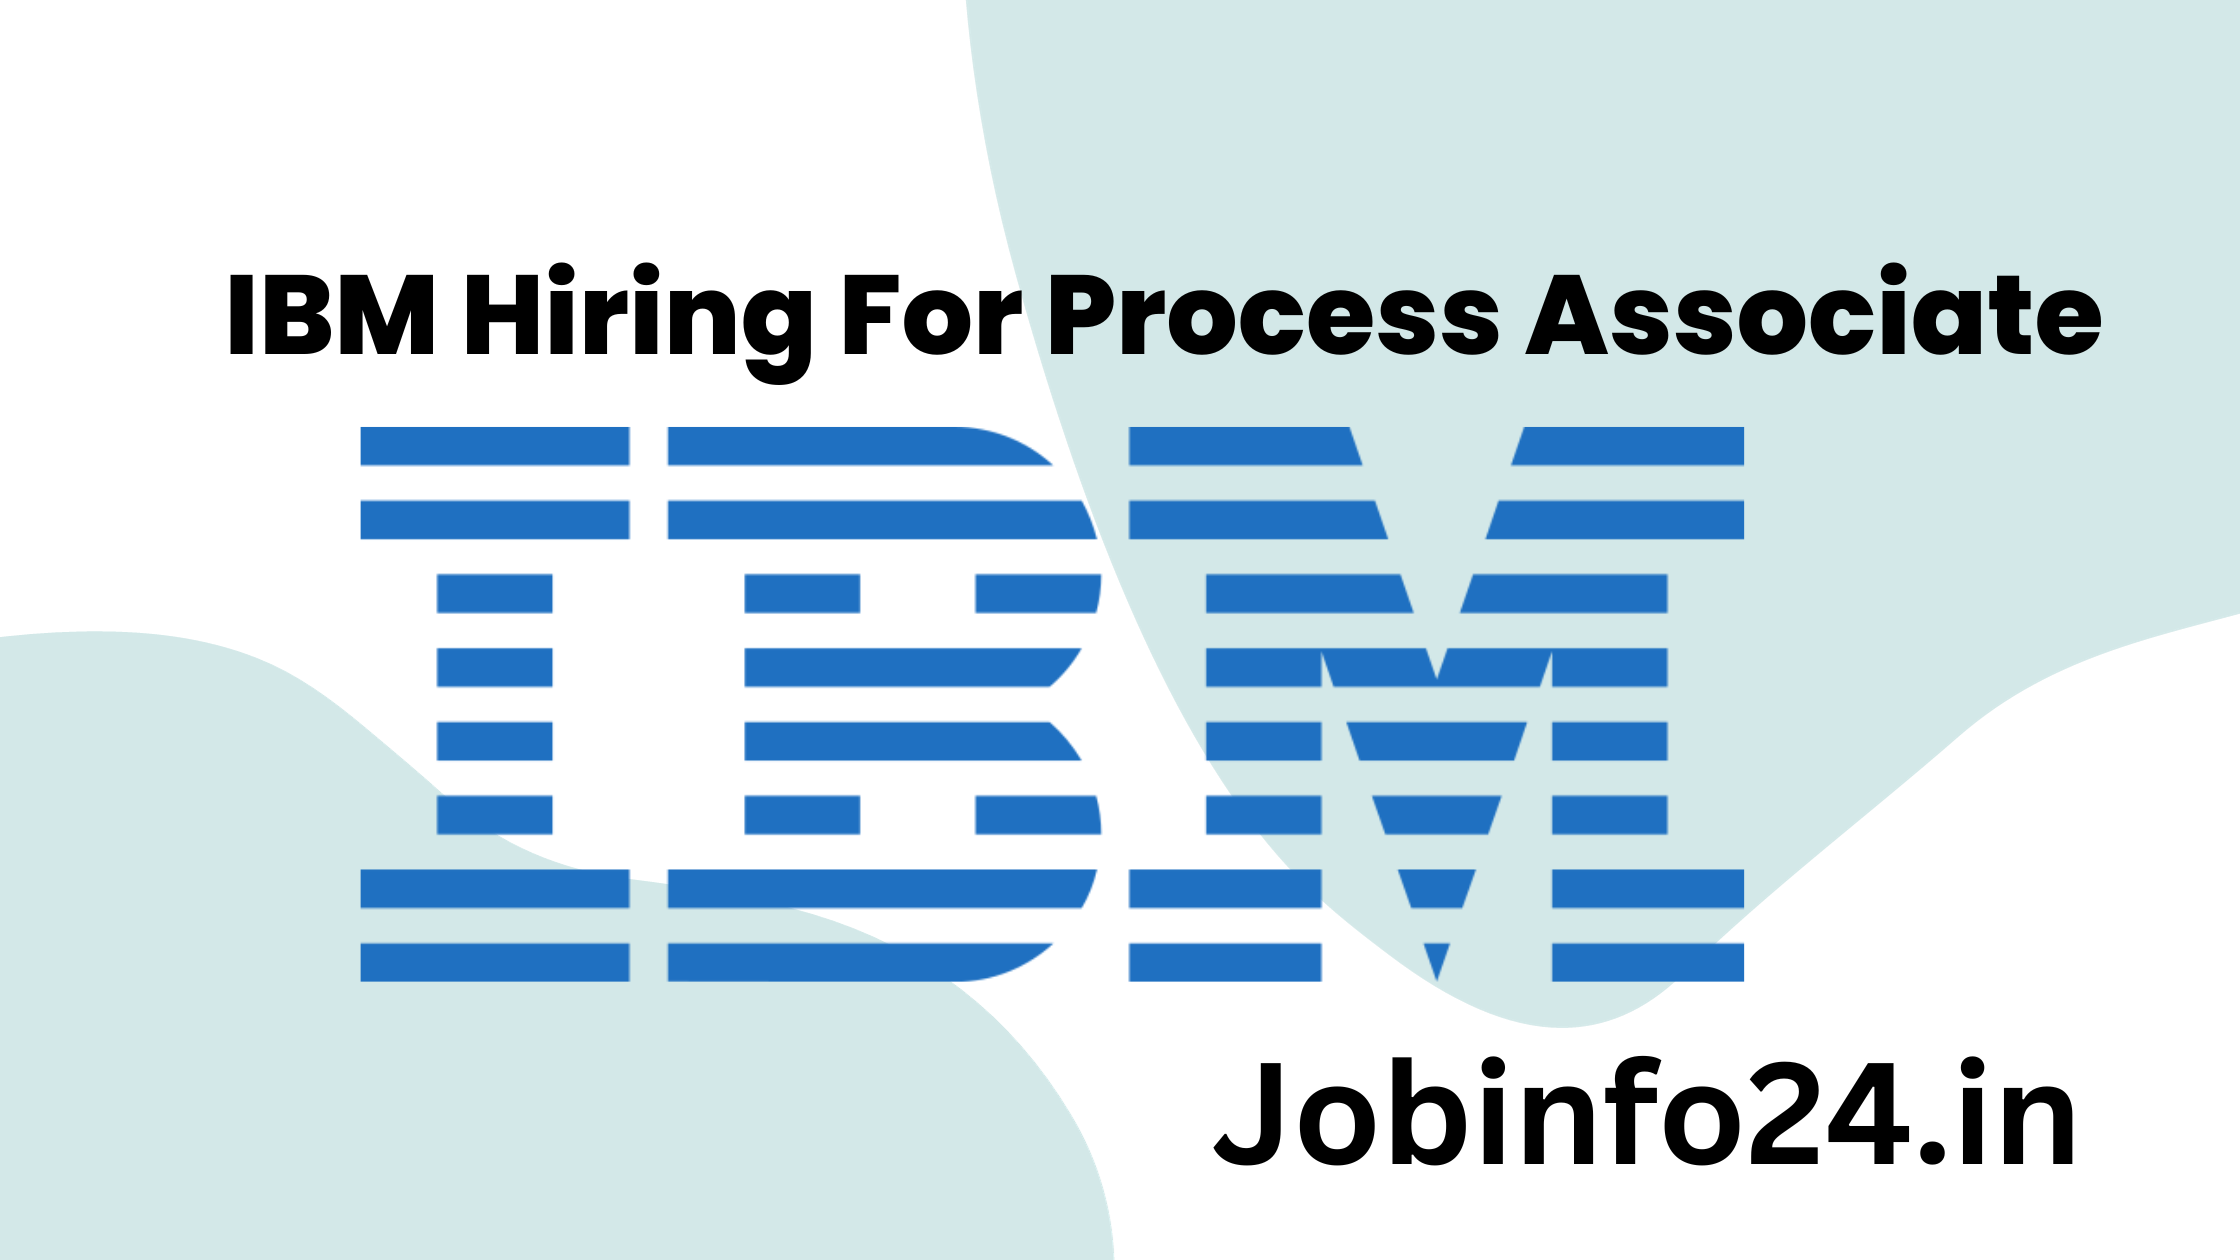 IBM Hiring For Process Associate